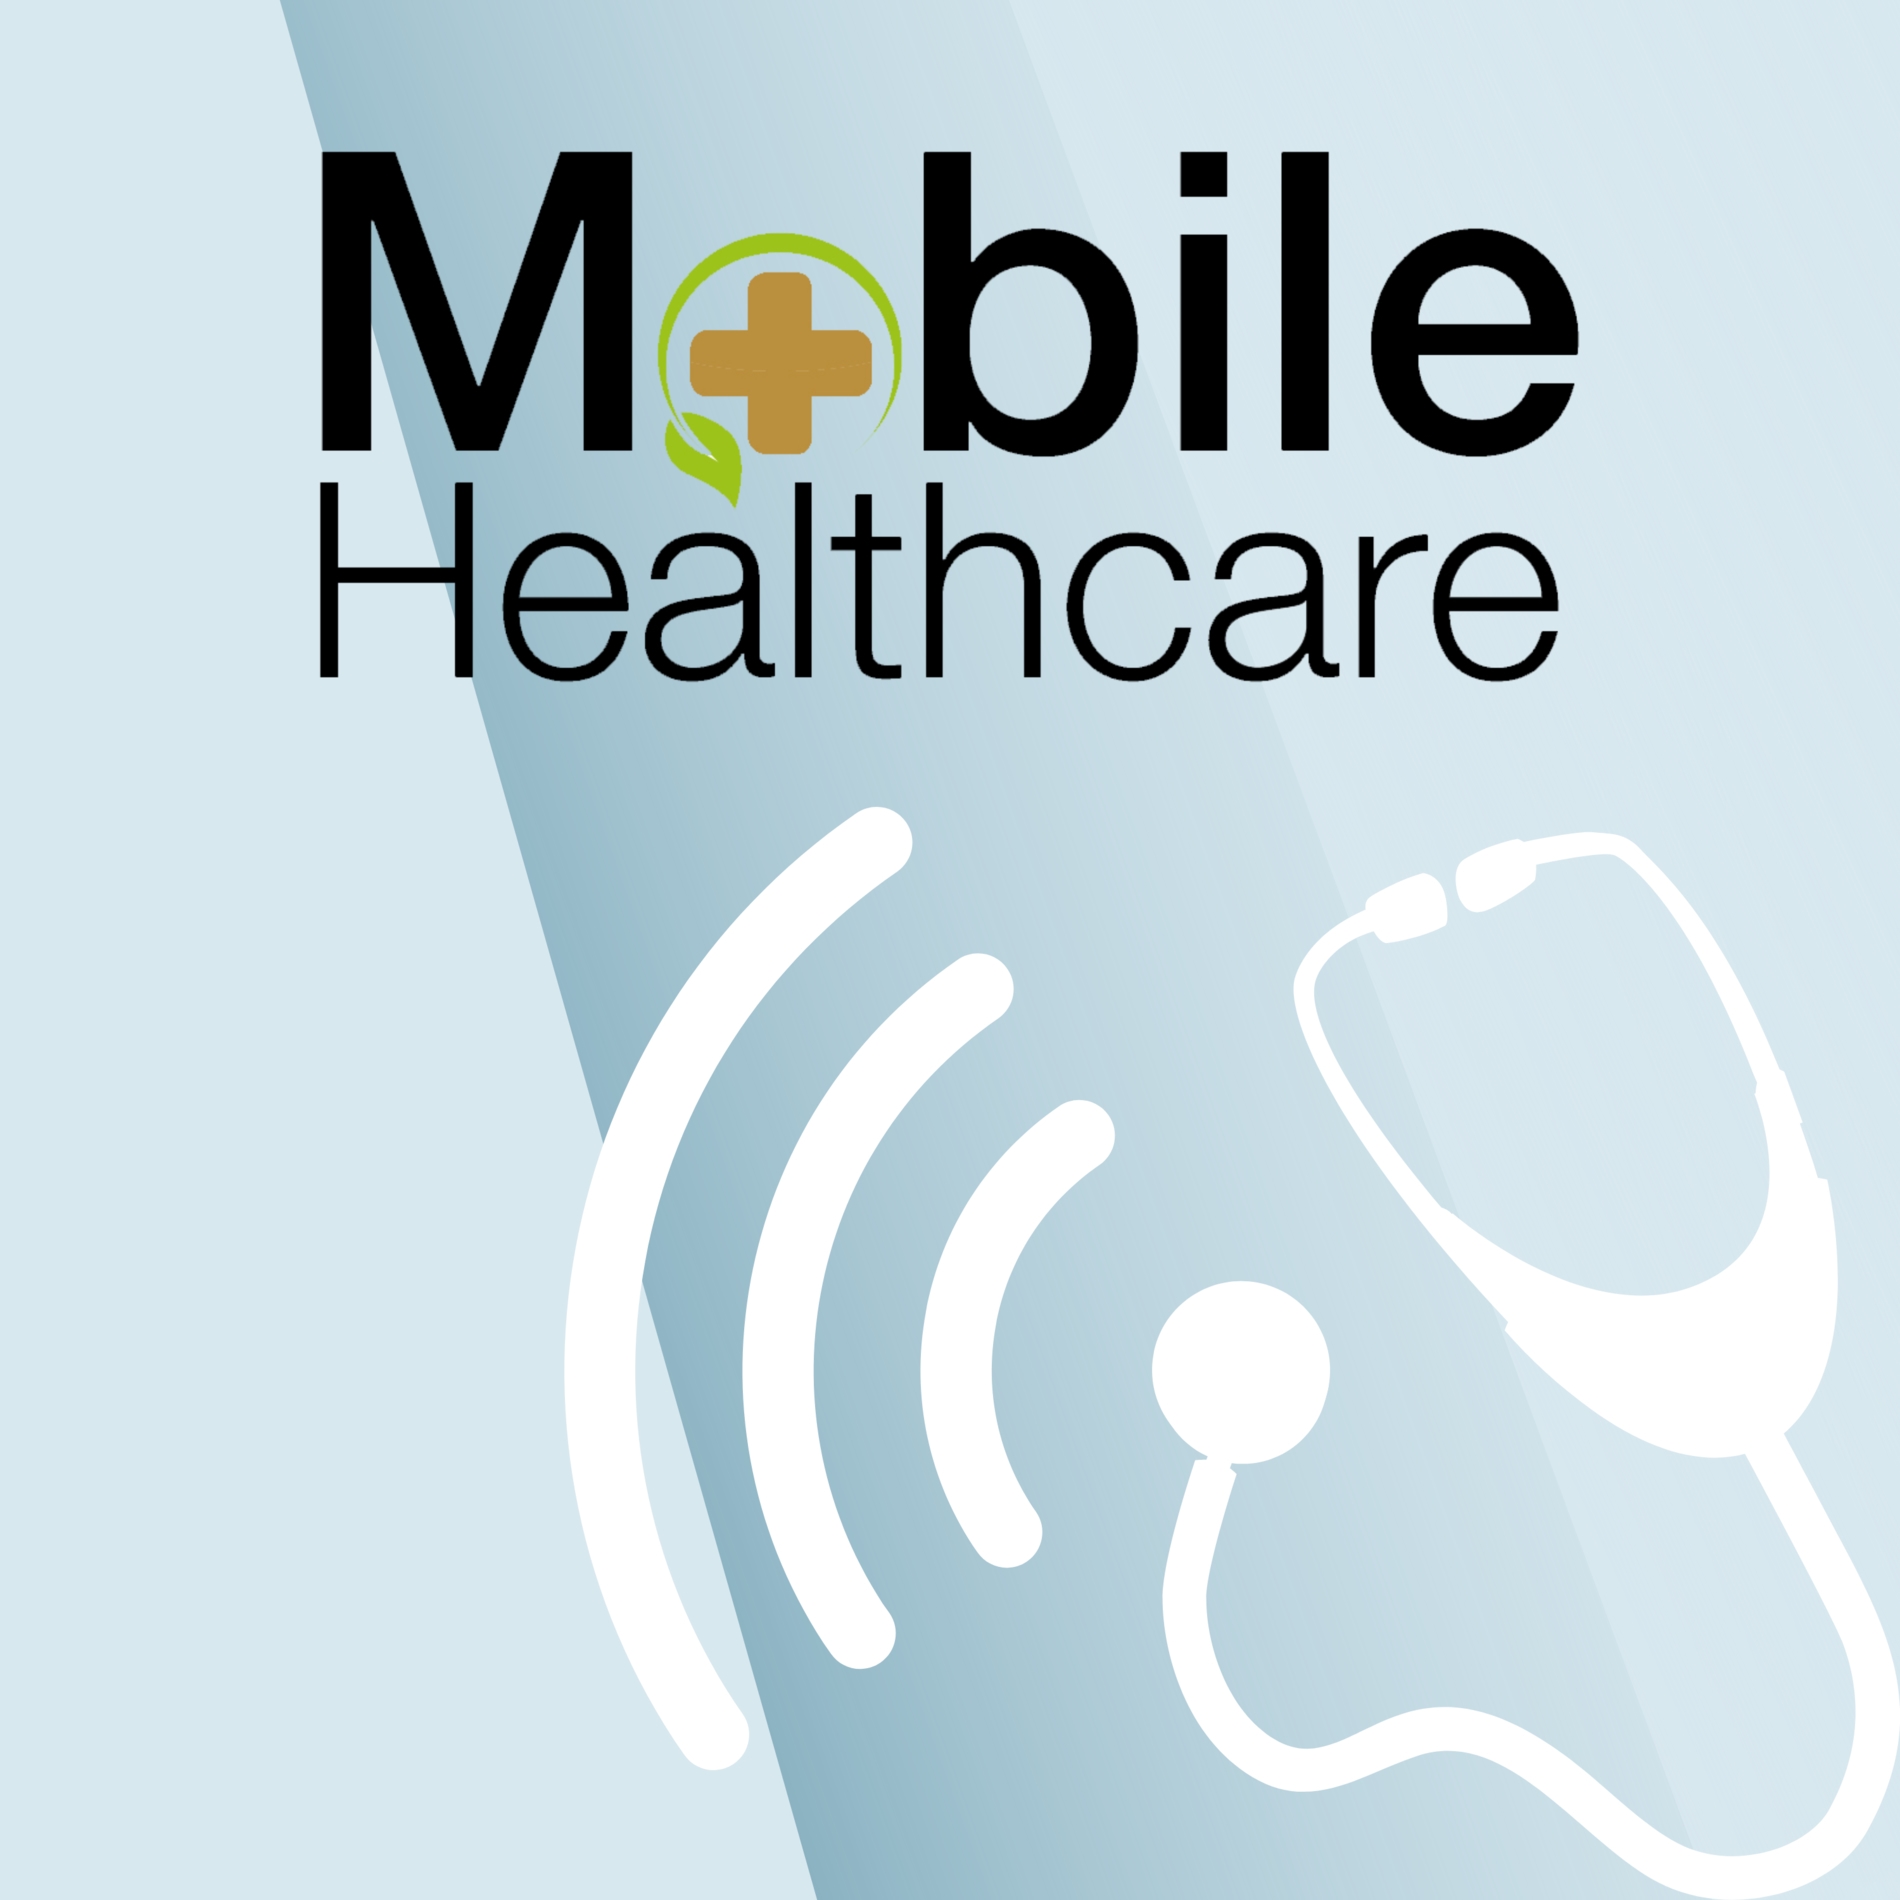 Mobile Healthcare Podcast